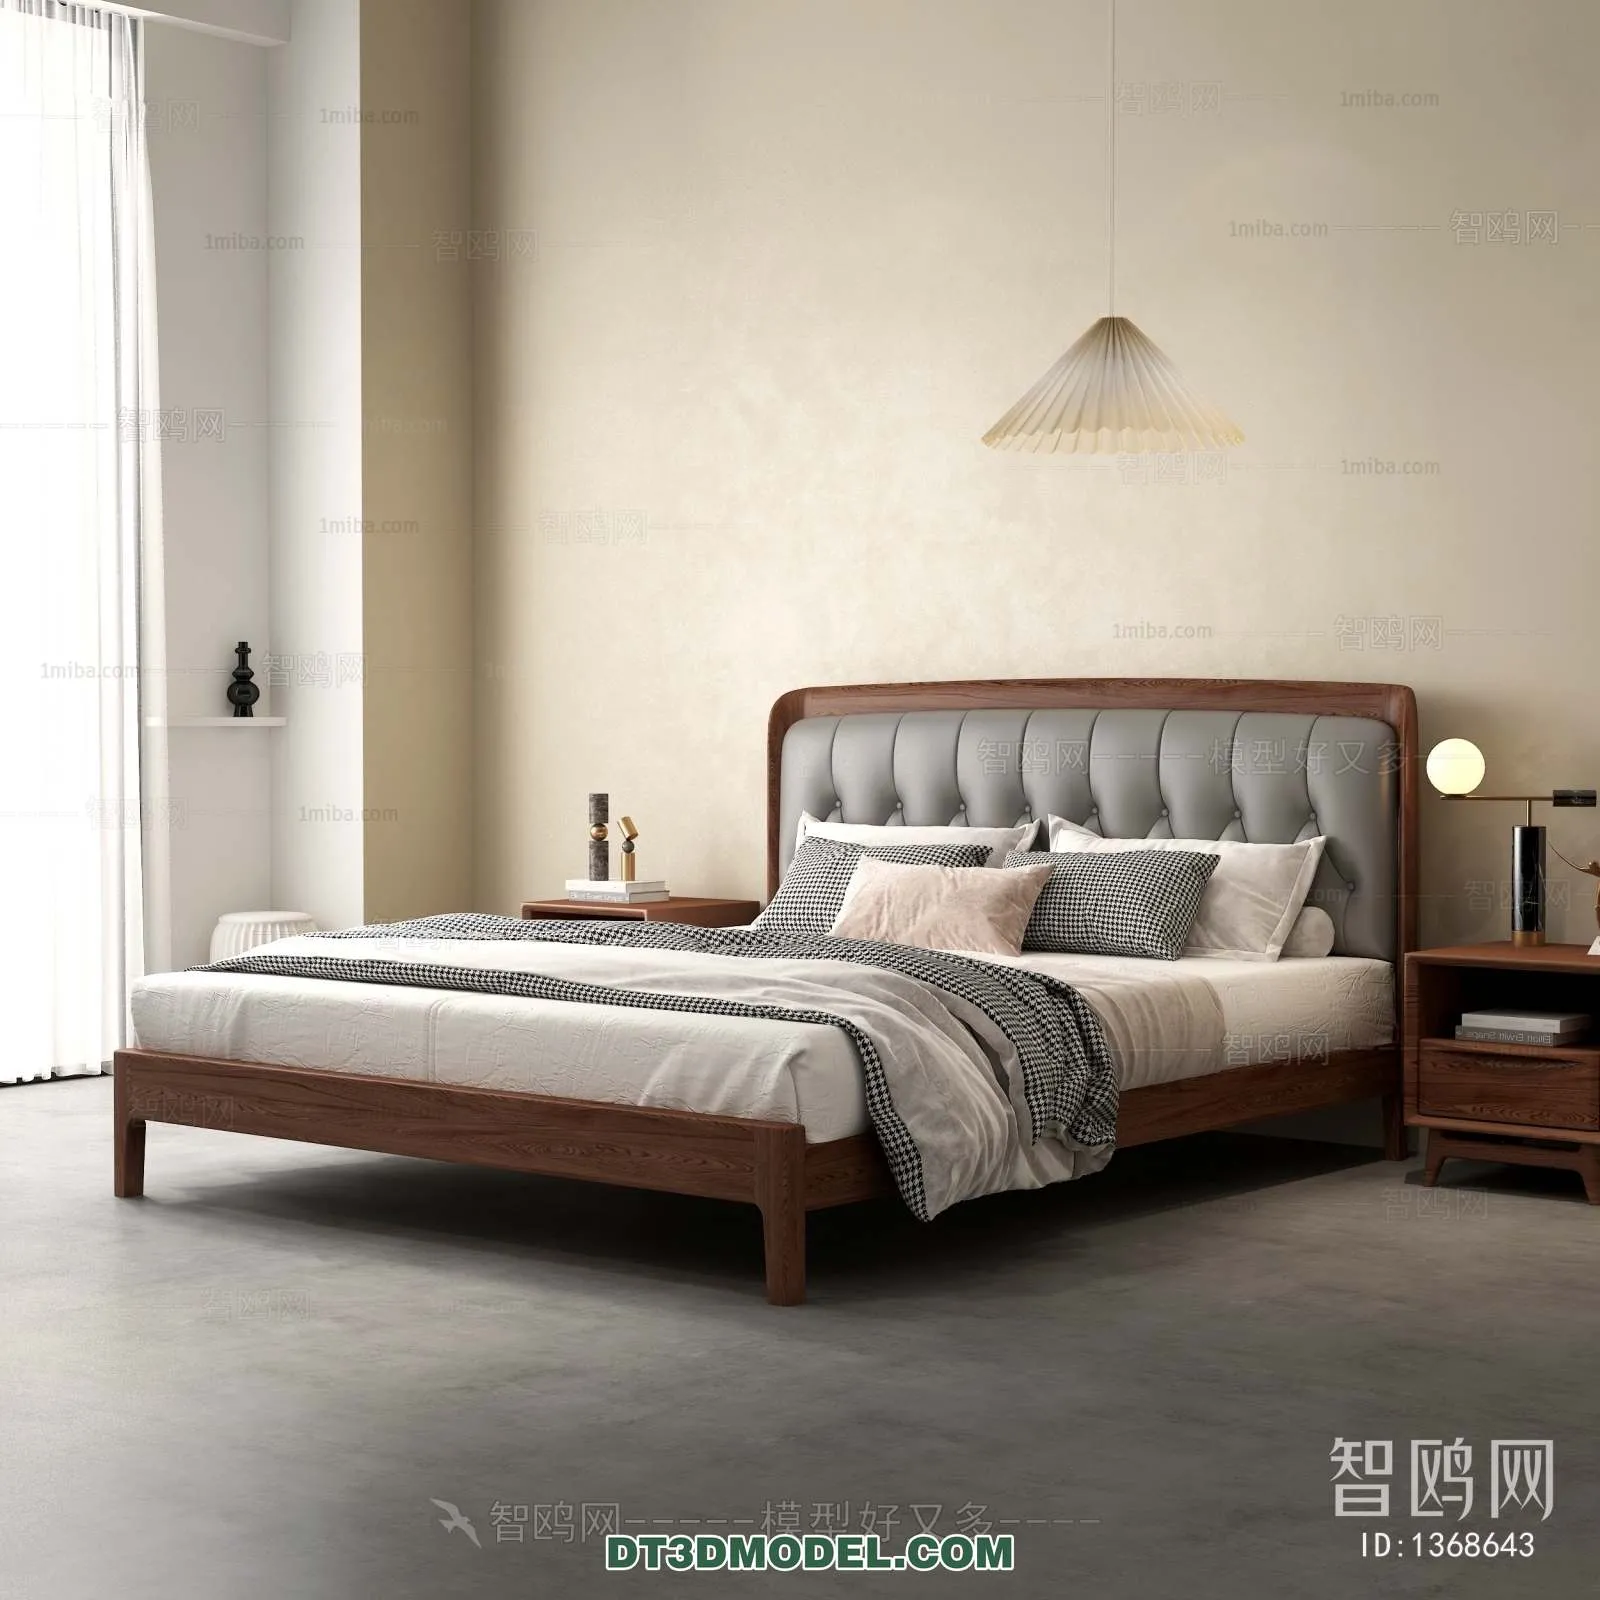 Double Bed 3D Models – 0085